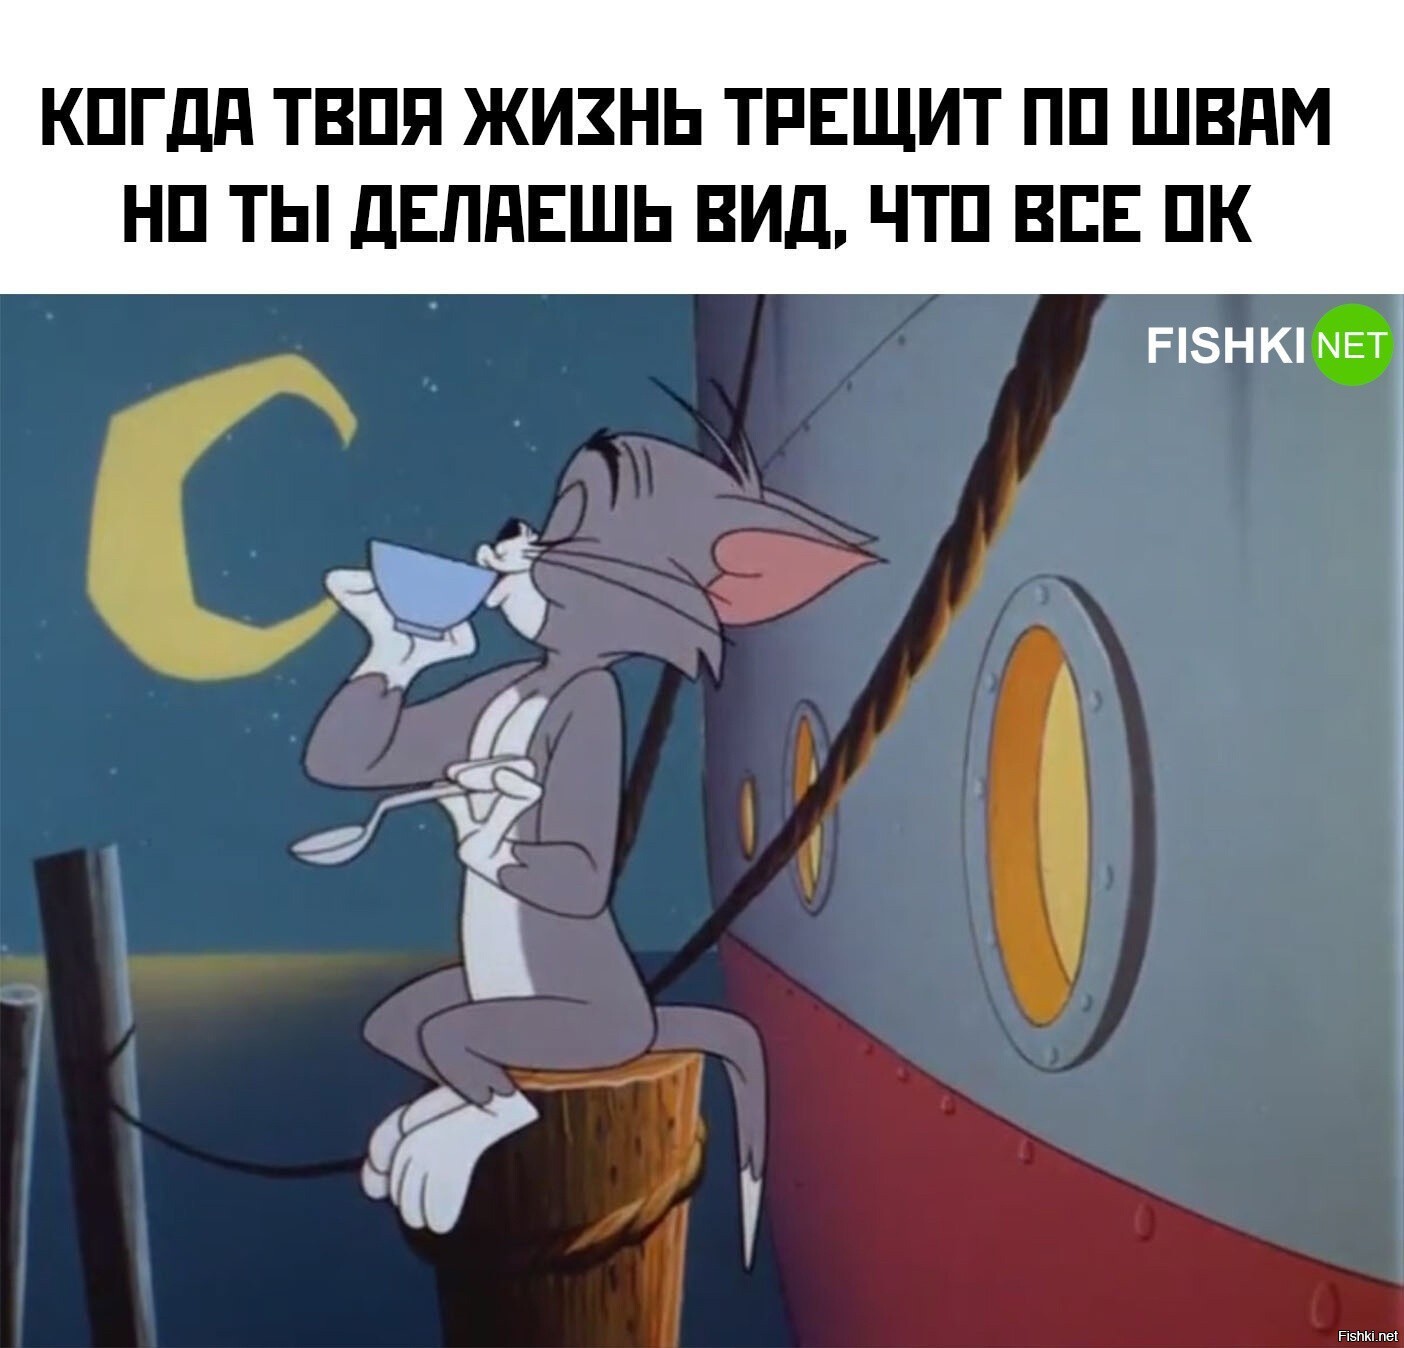 Том пьет игра. Tom and Jerry 1963. Кот том и Джерри 1963. Том и Джерри 1963-1967 том. Джерри кадры.